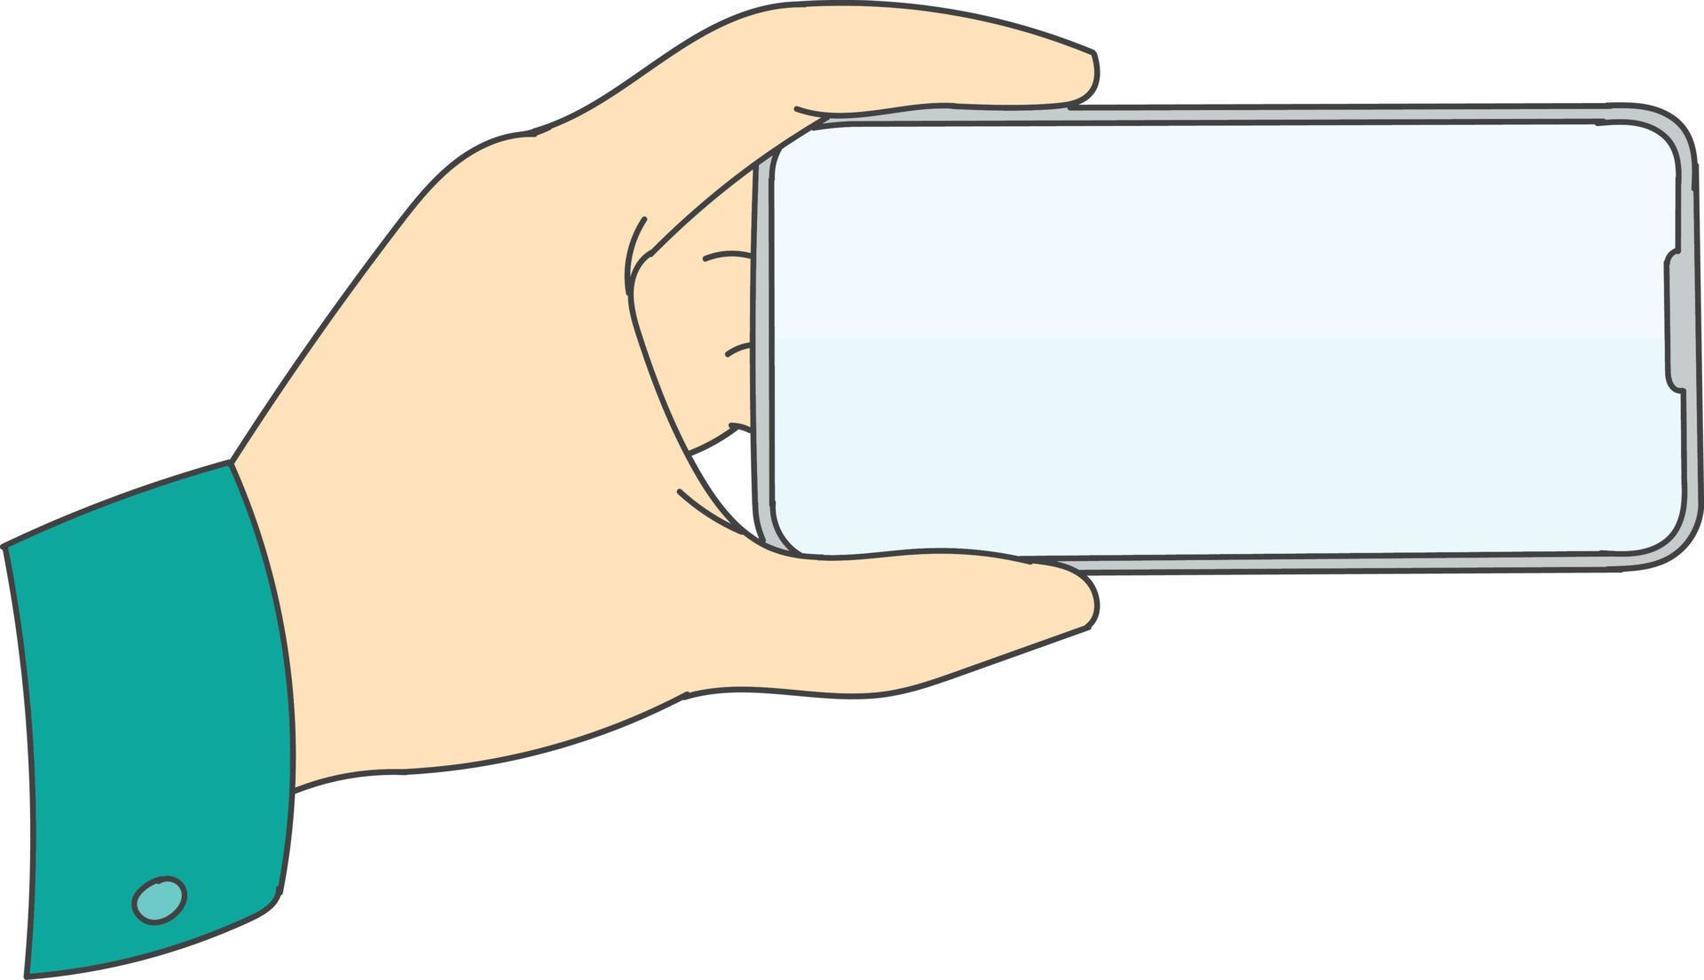 main tenant un smartphone avec écran vide vecteur